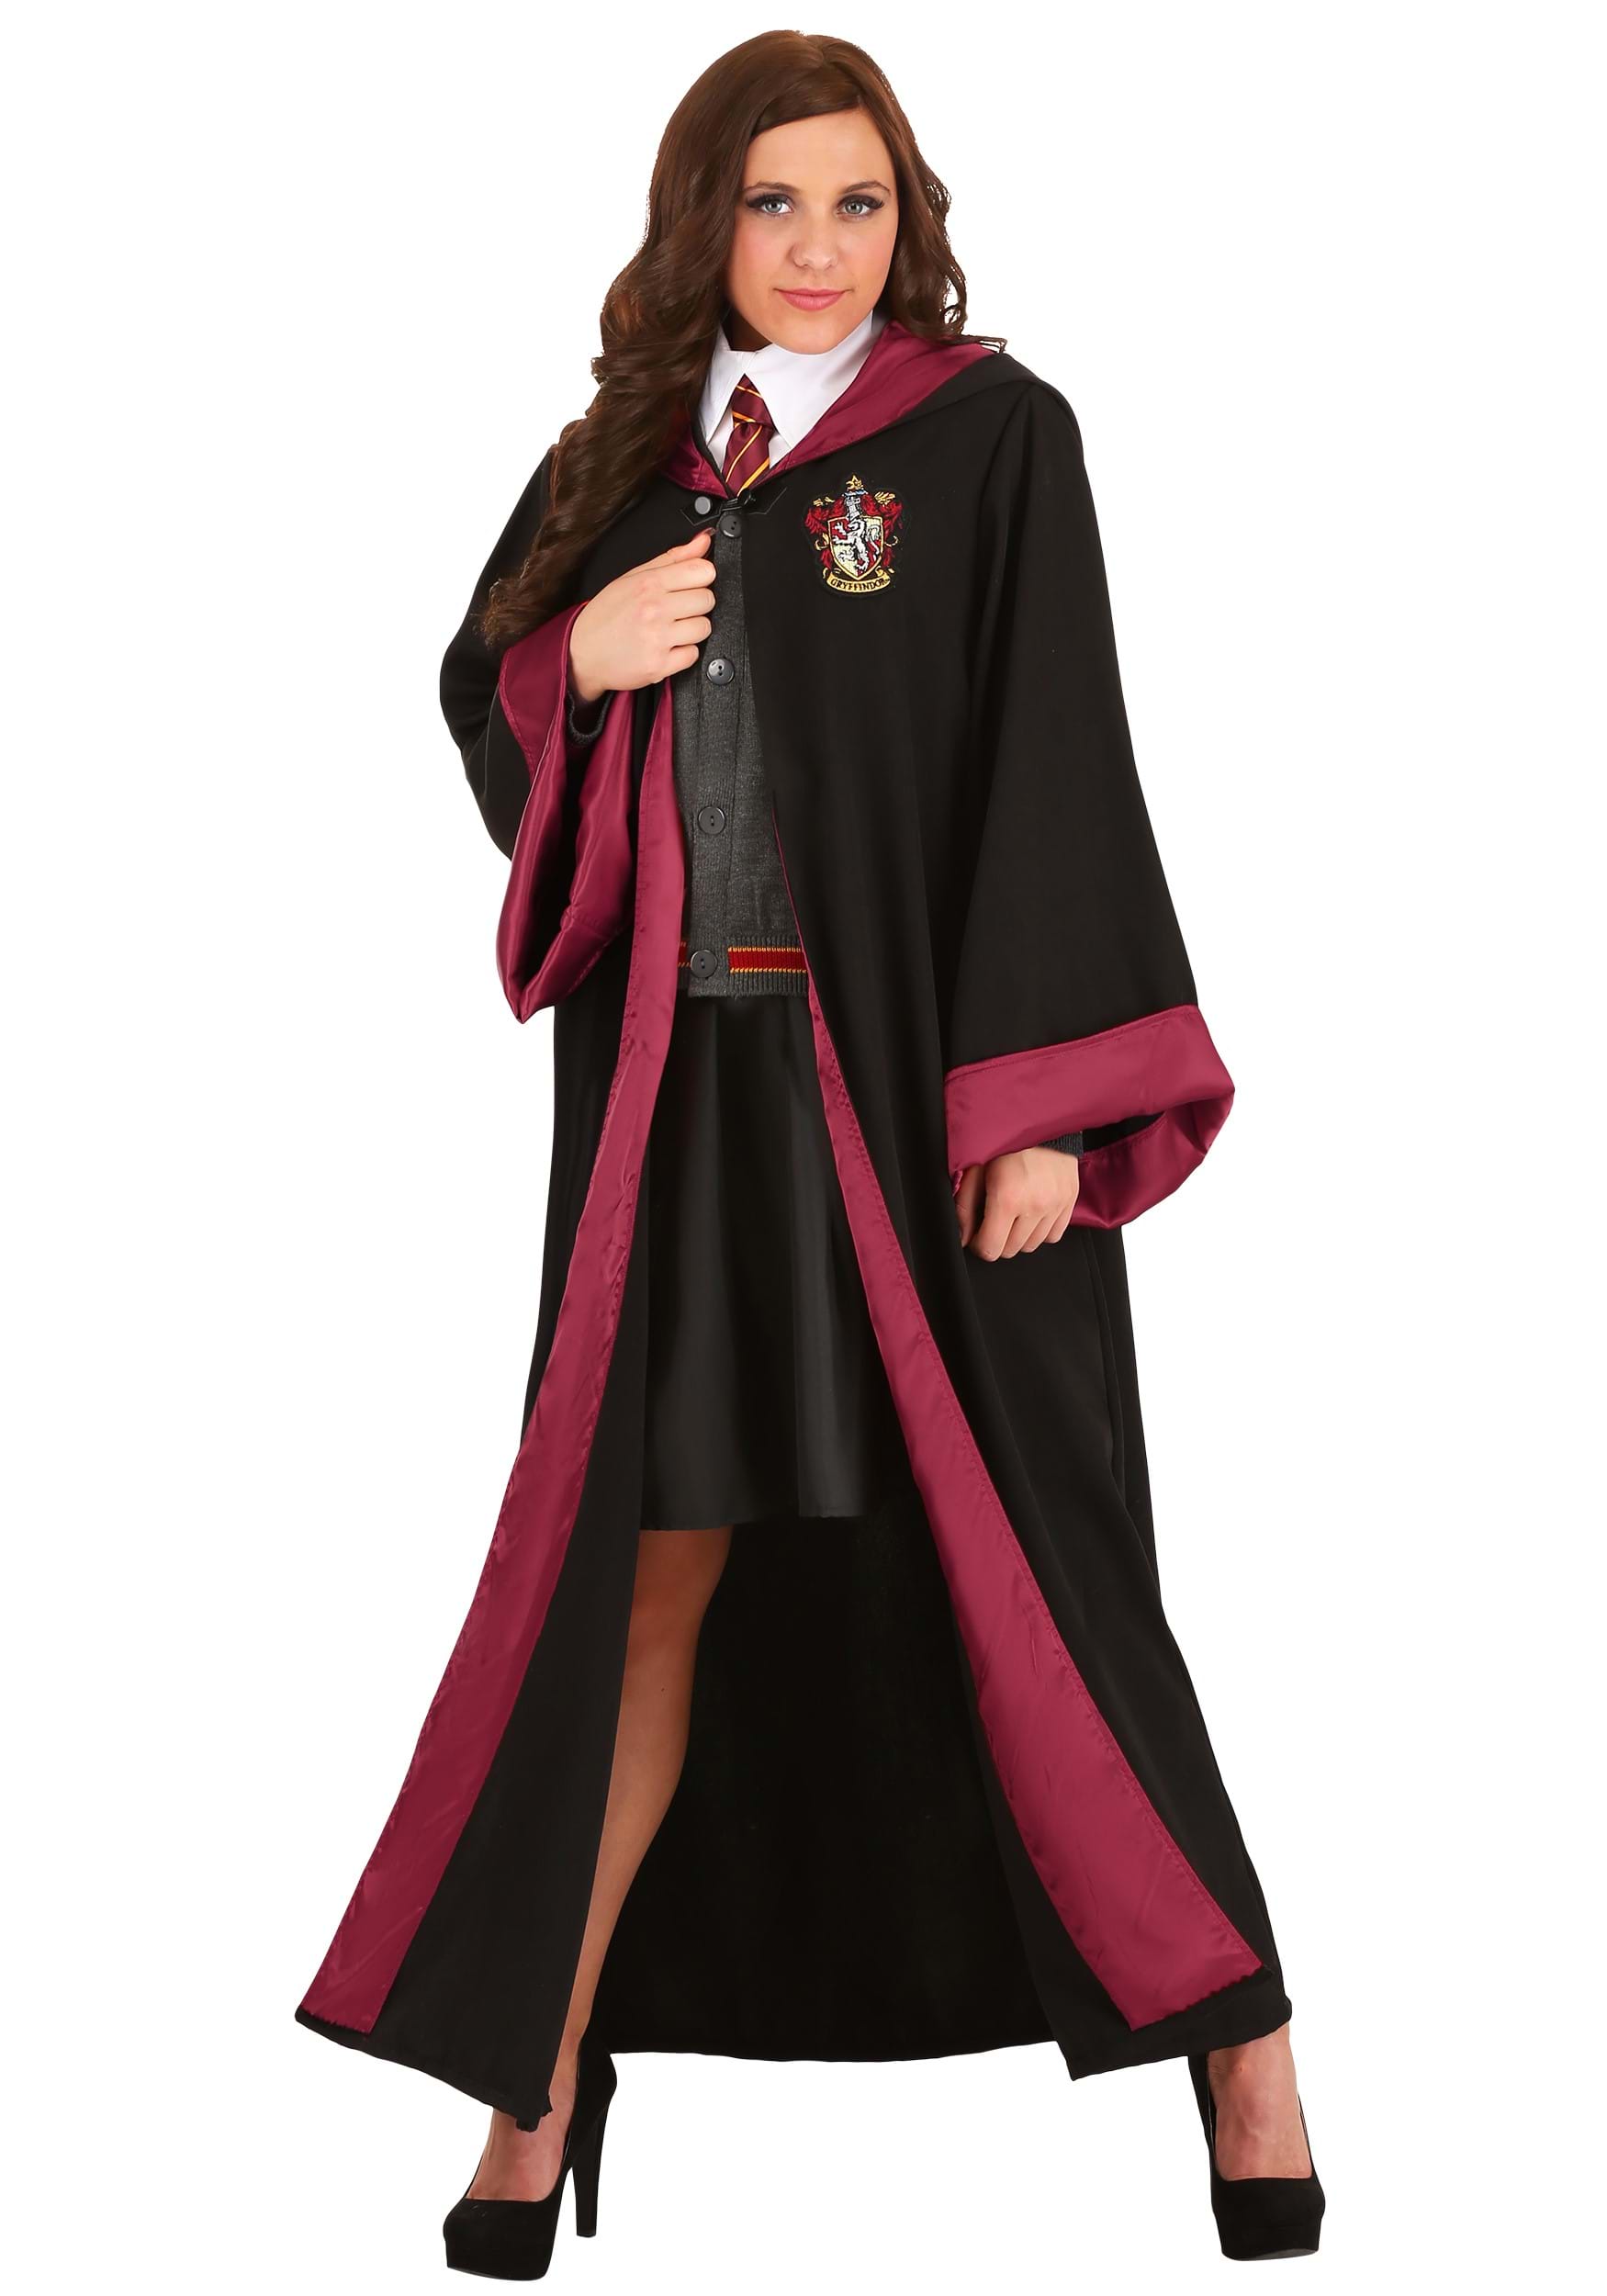 Women's Deluxe Harry Potter Hermione Costume